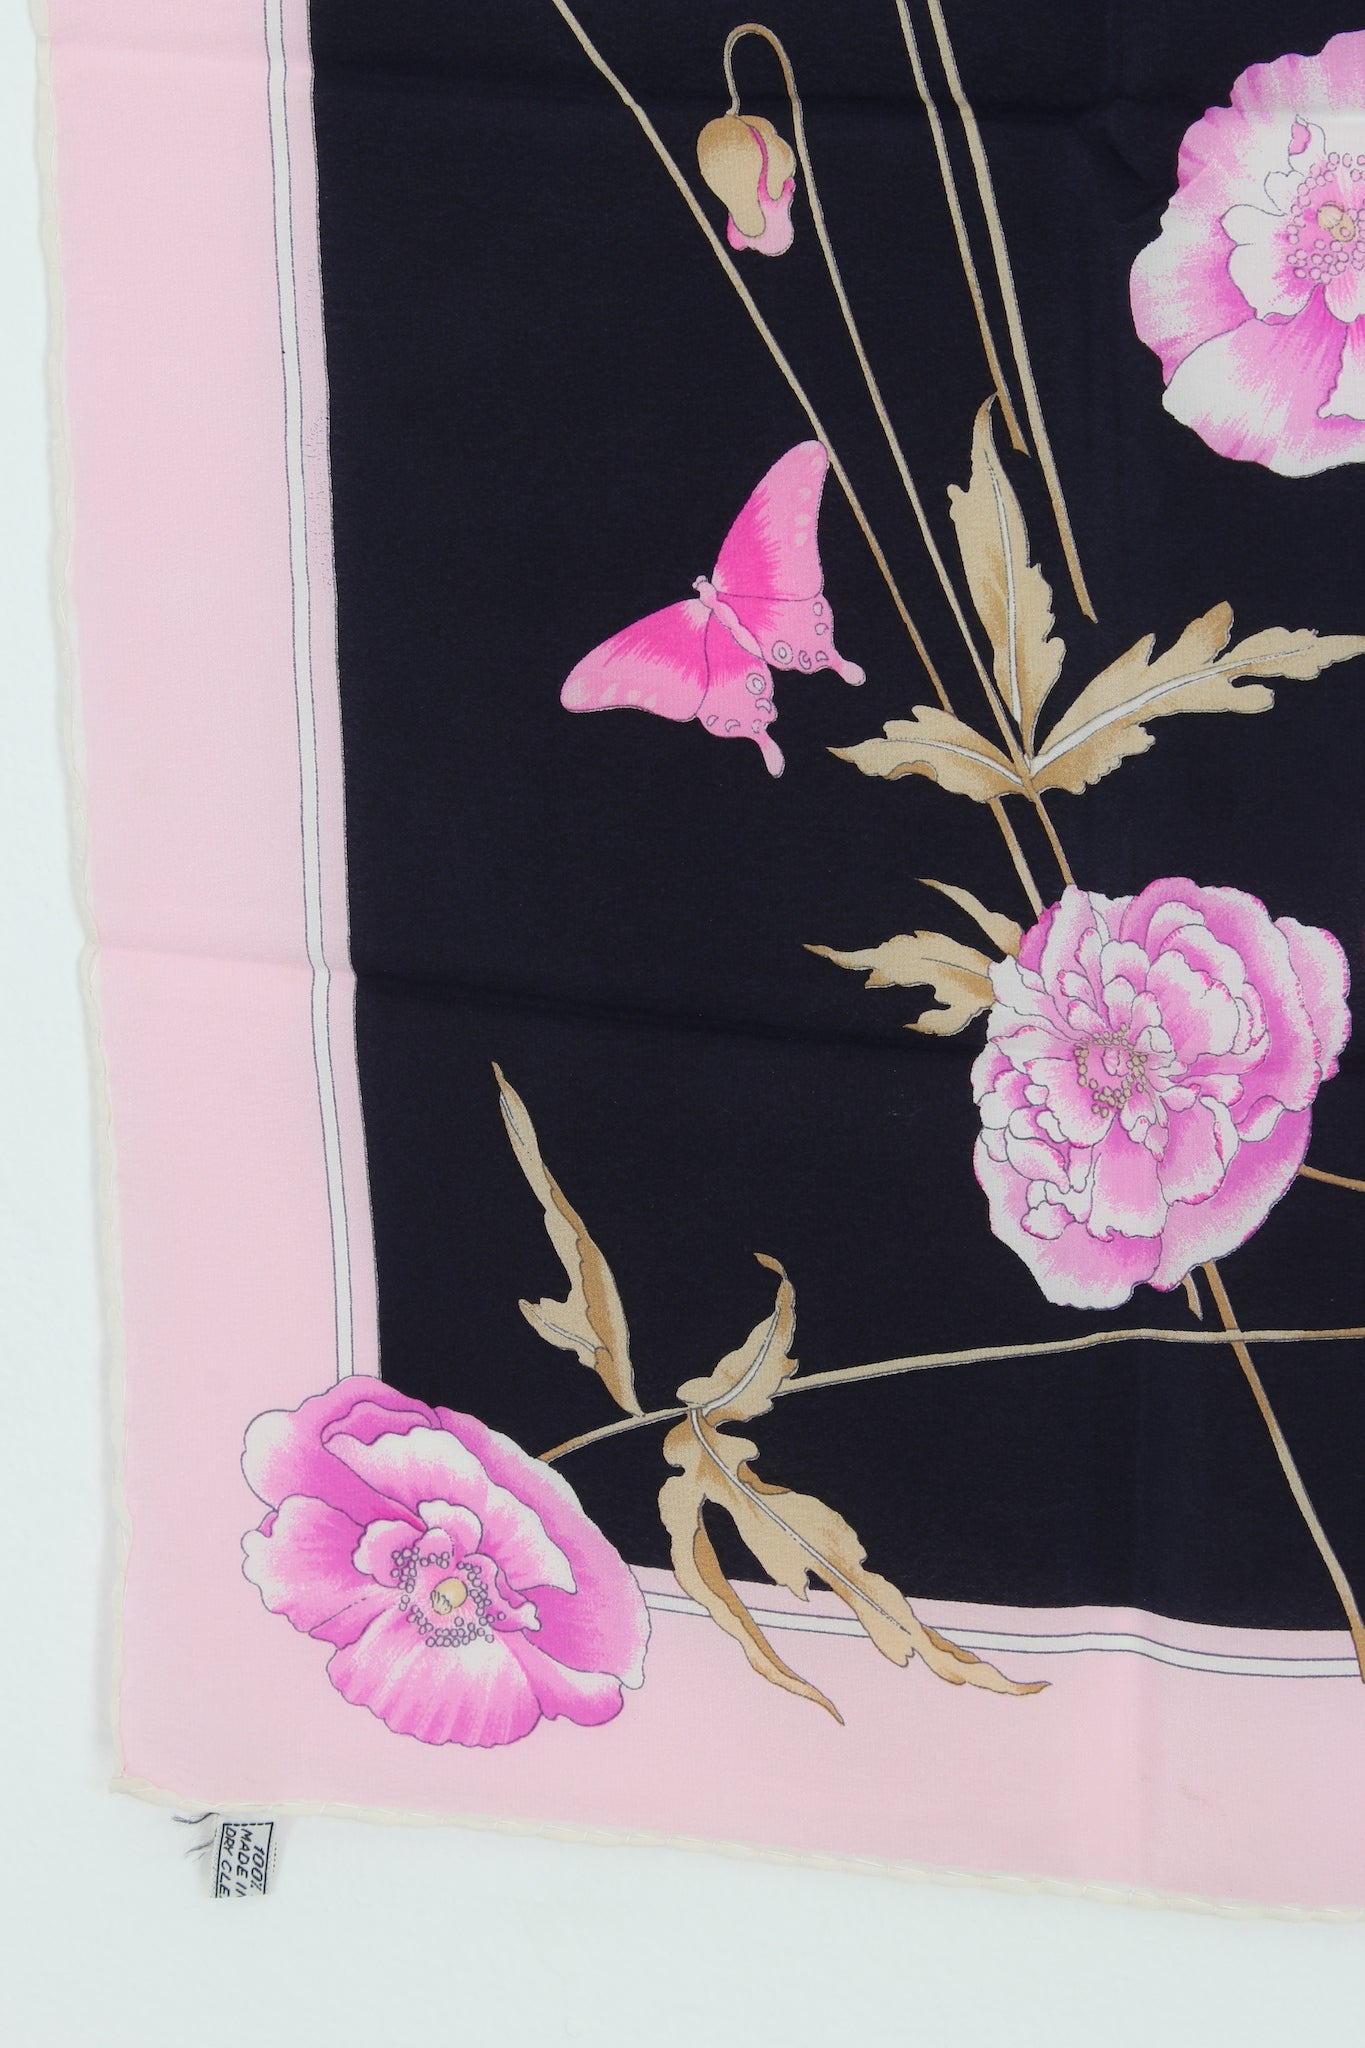 Leonard Paris Black Pink Silk Floral Vintage Scarf 80s